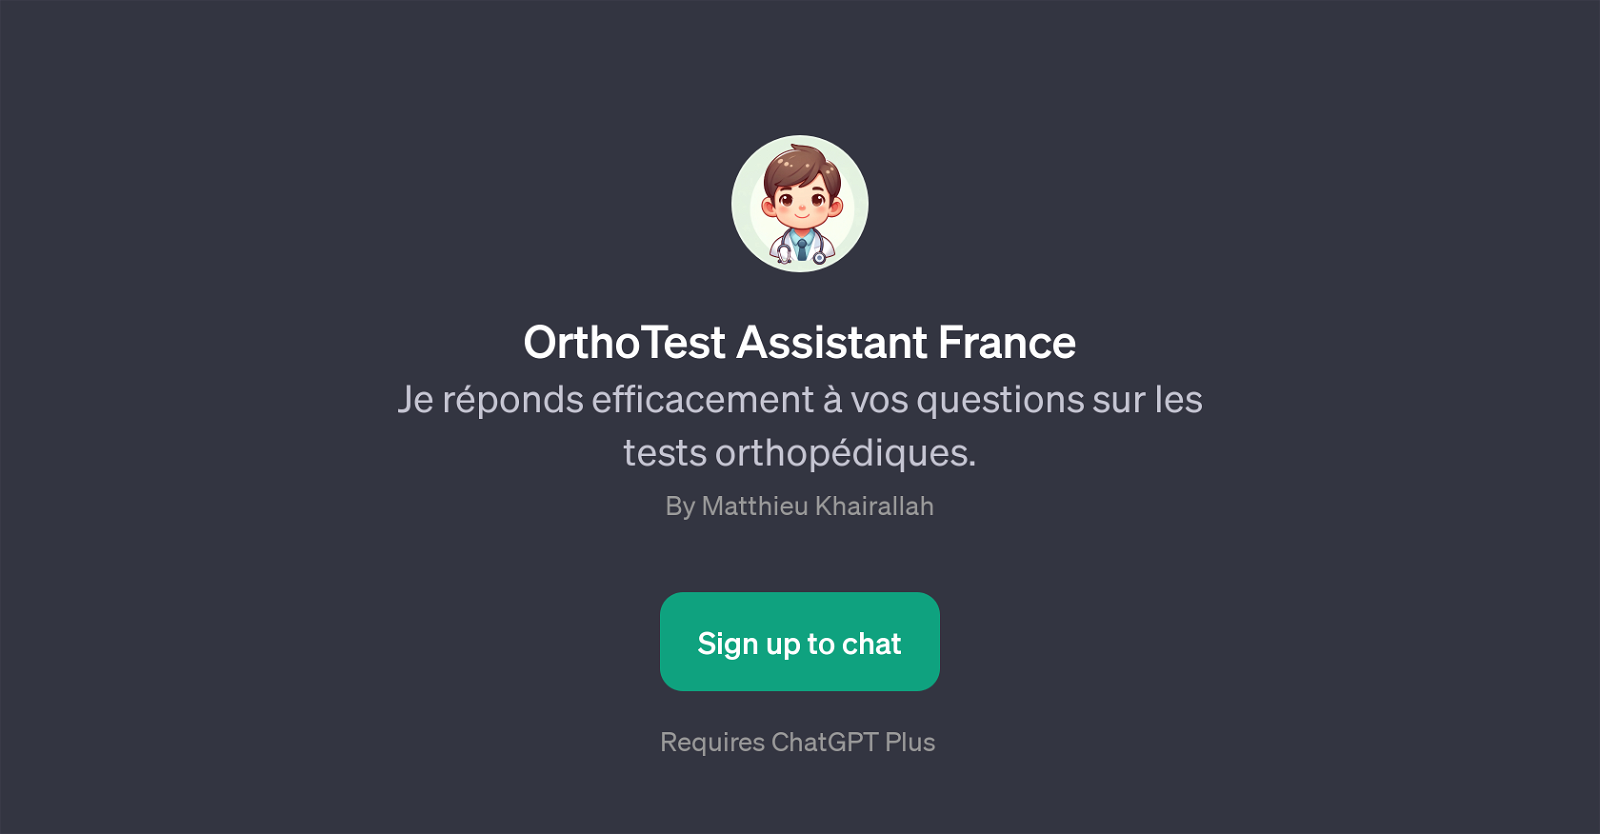 OrthoTest Assistant France website